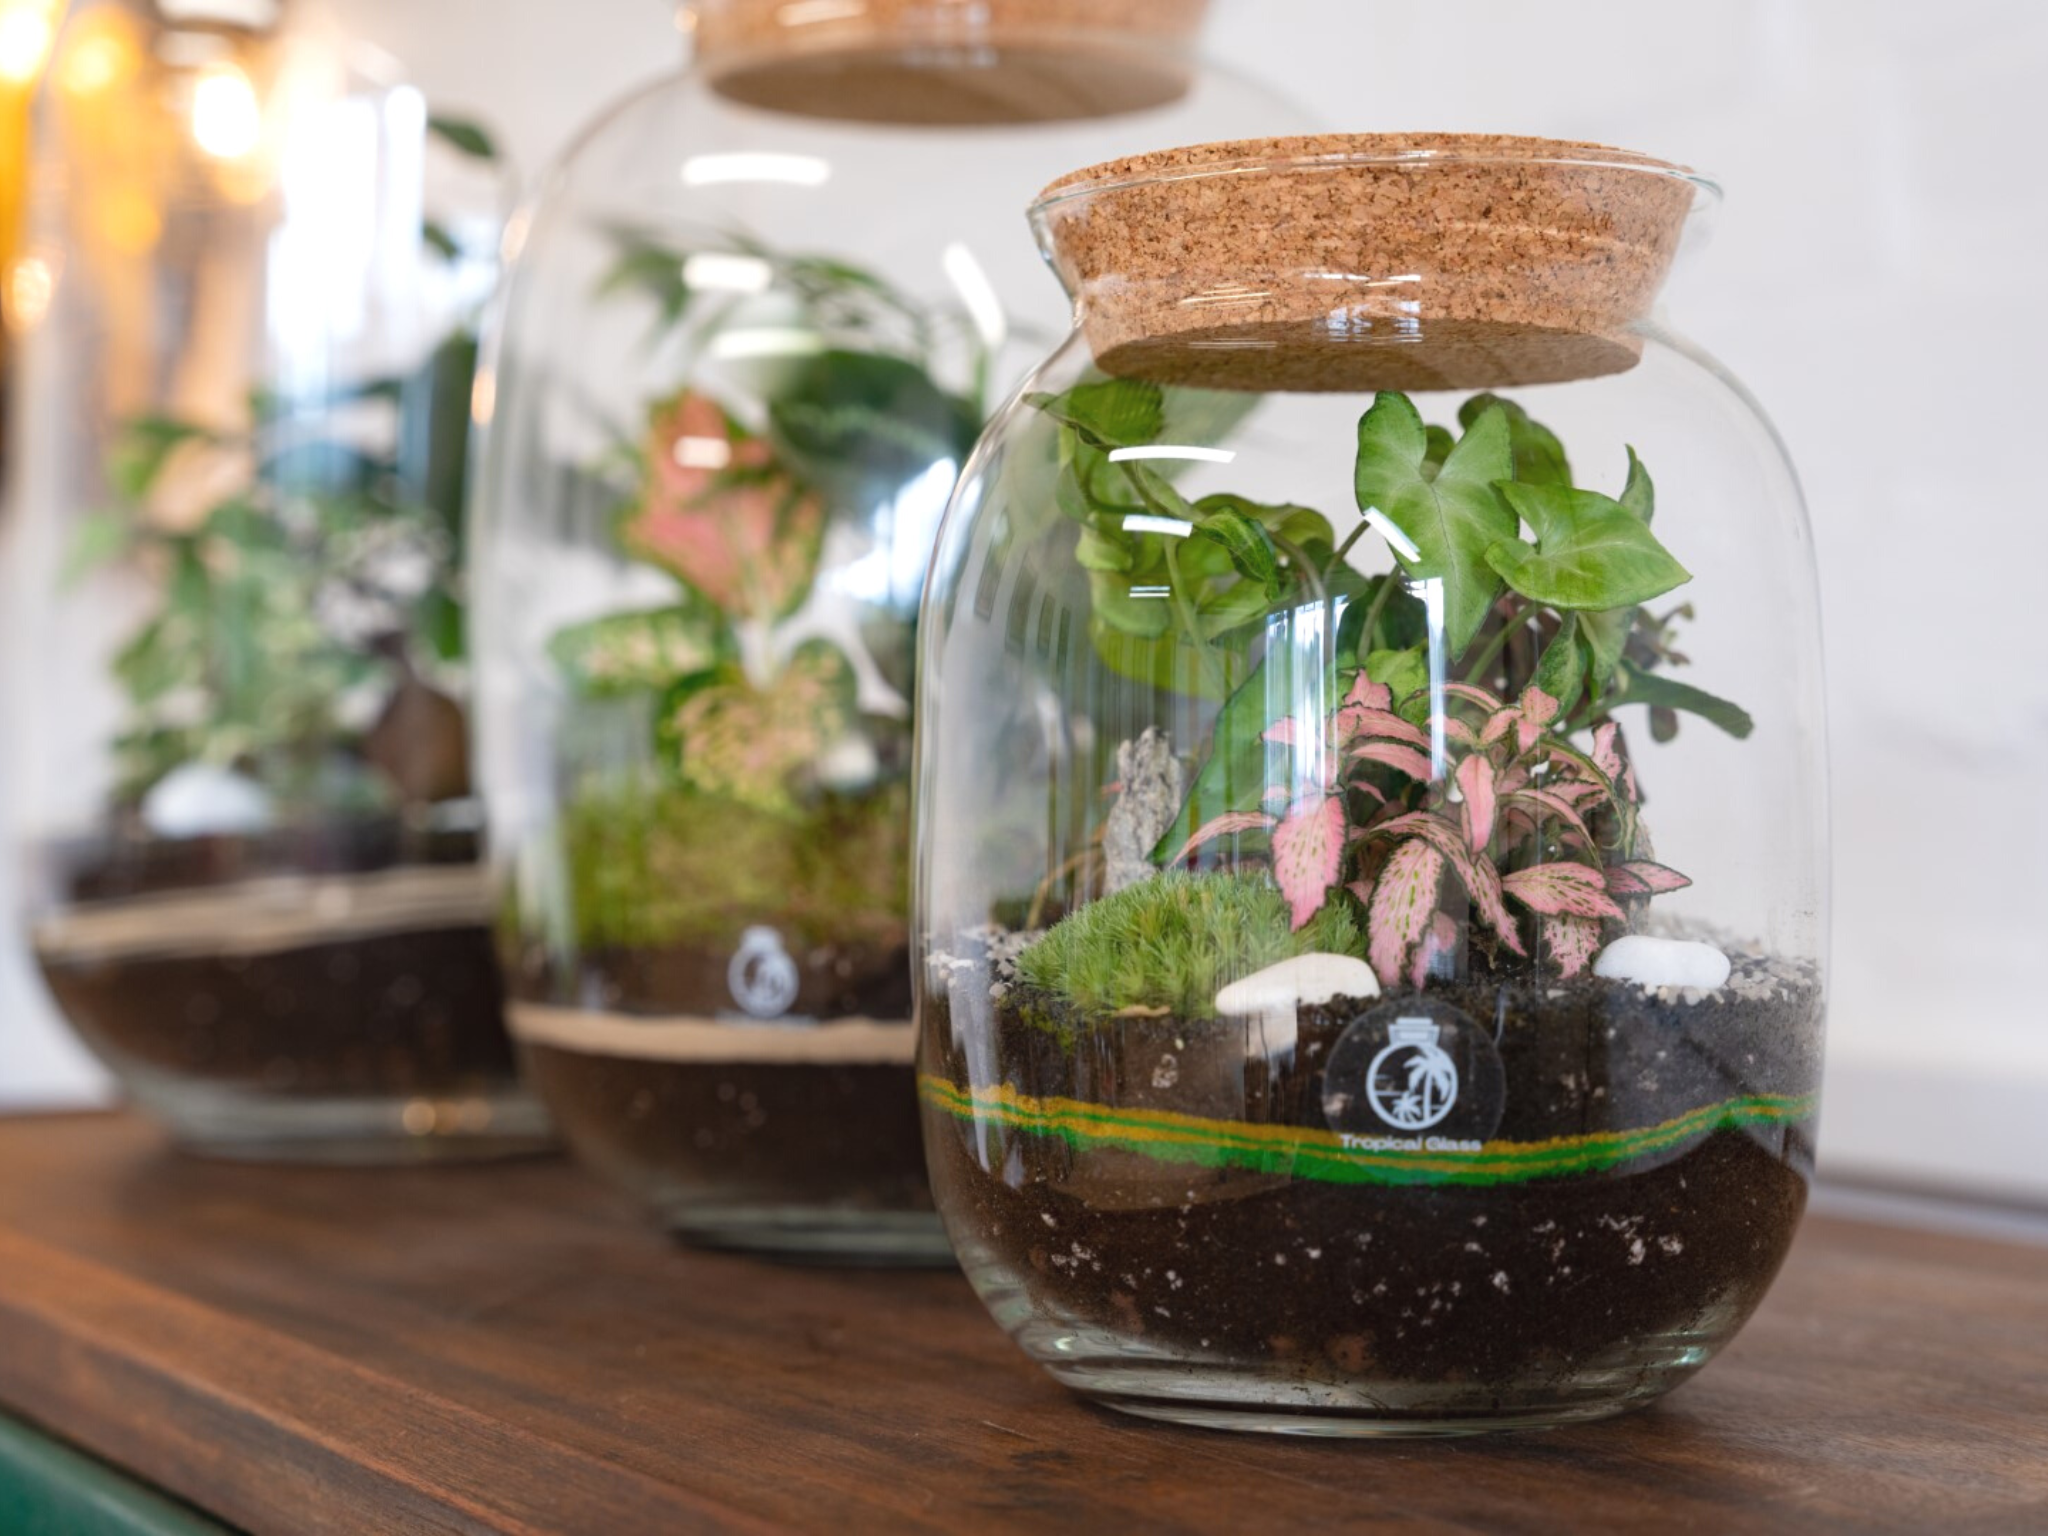 glass globe jar terrarium with led